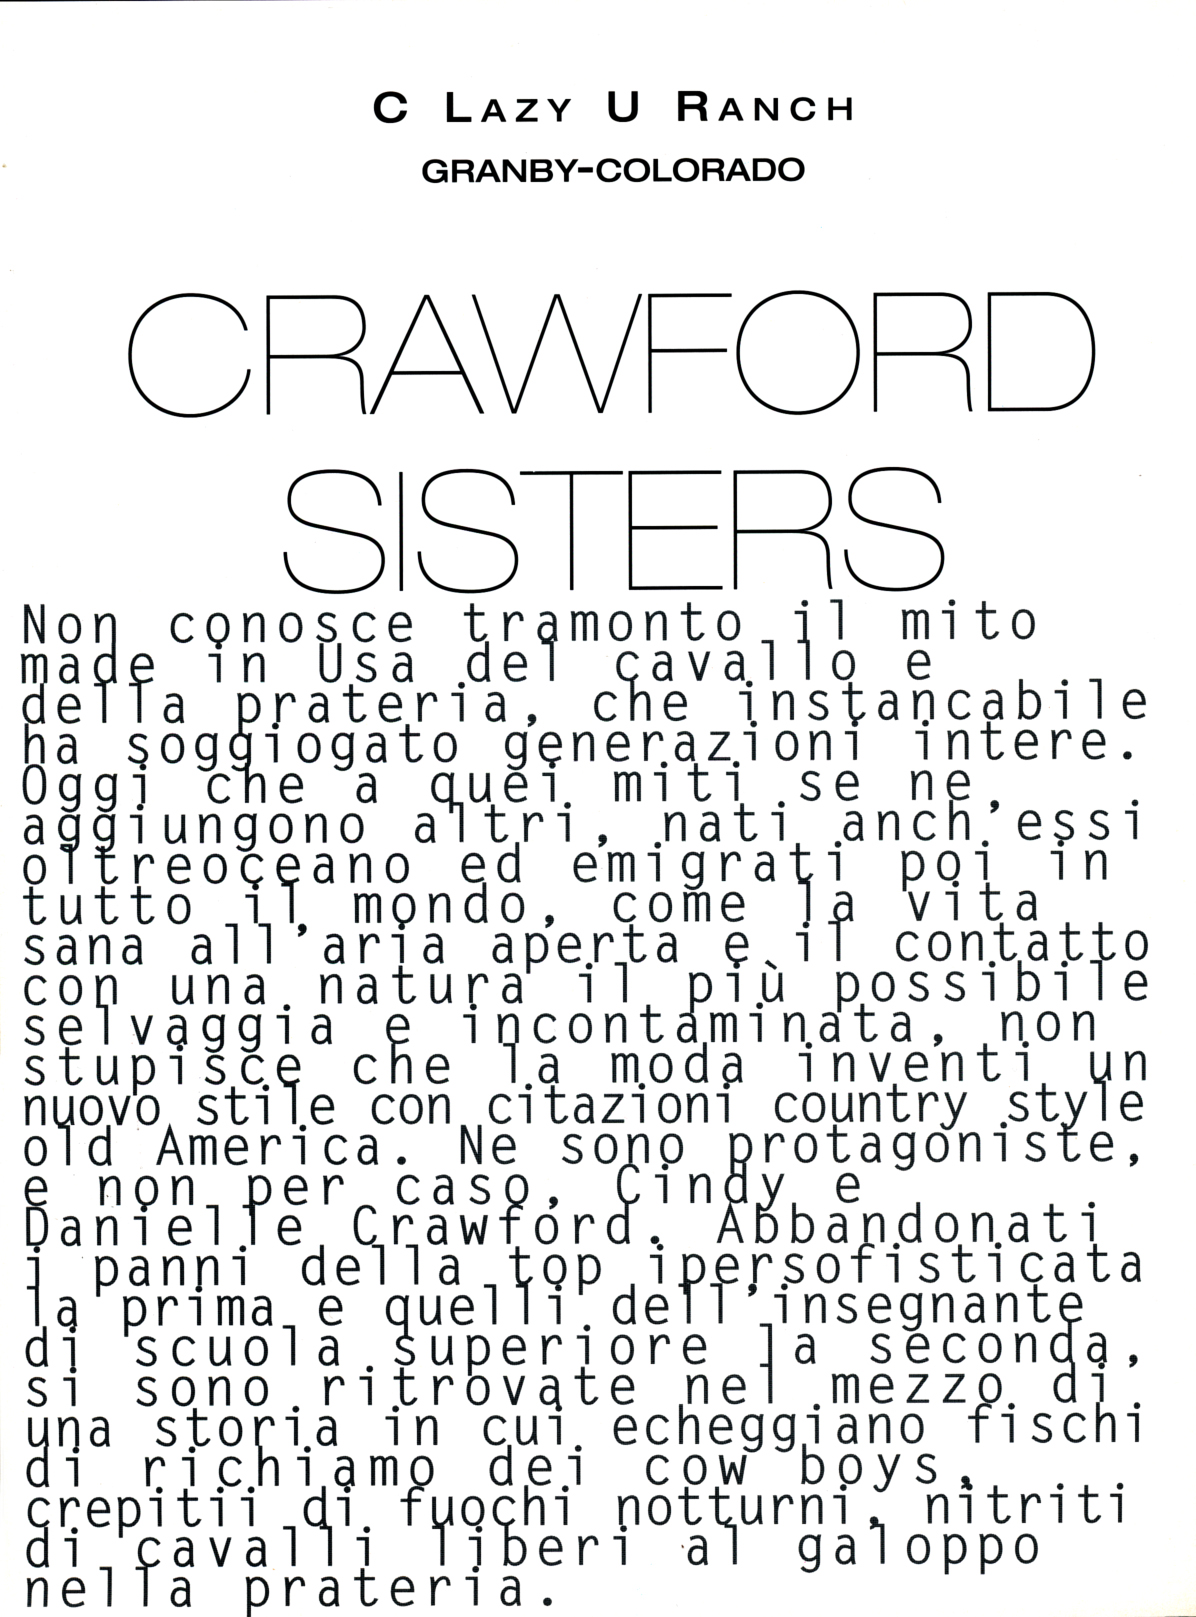 crawfordsisters 1